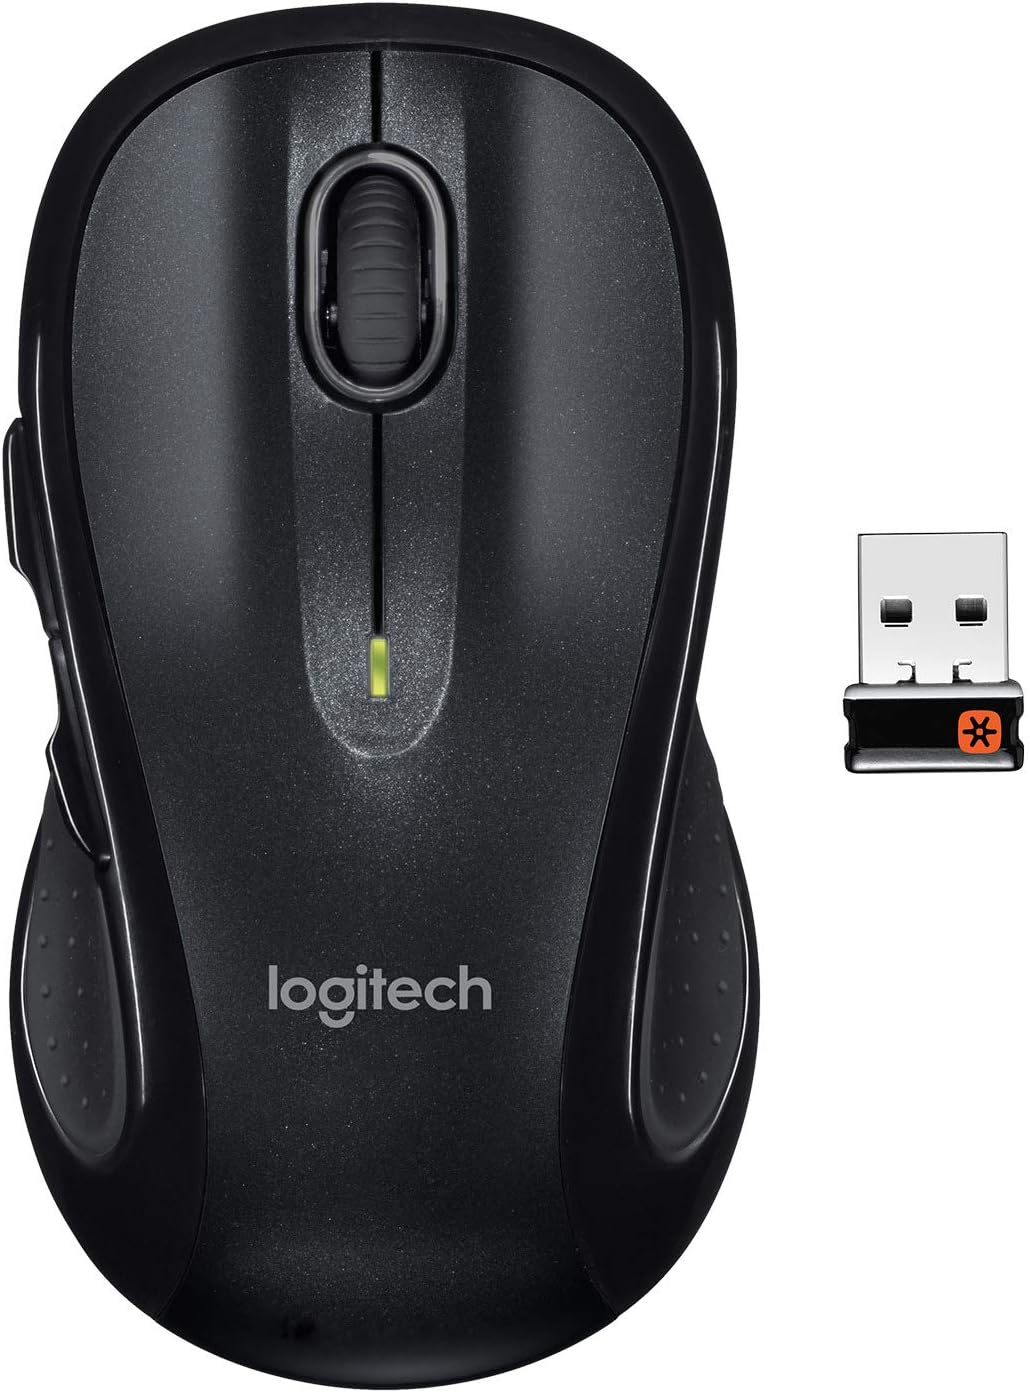 Logitech M510 Wireless Mouse-Black (Renewed) Review